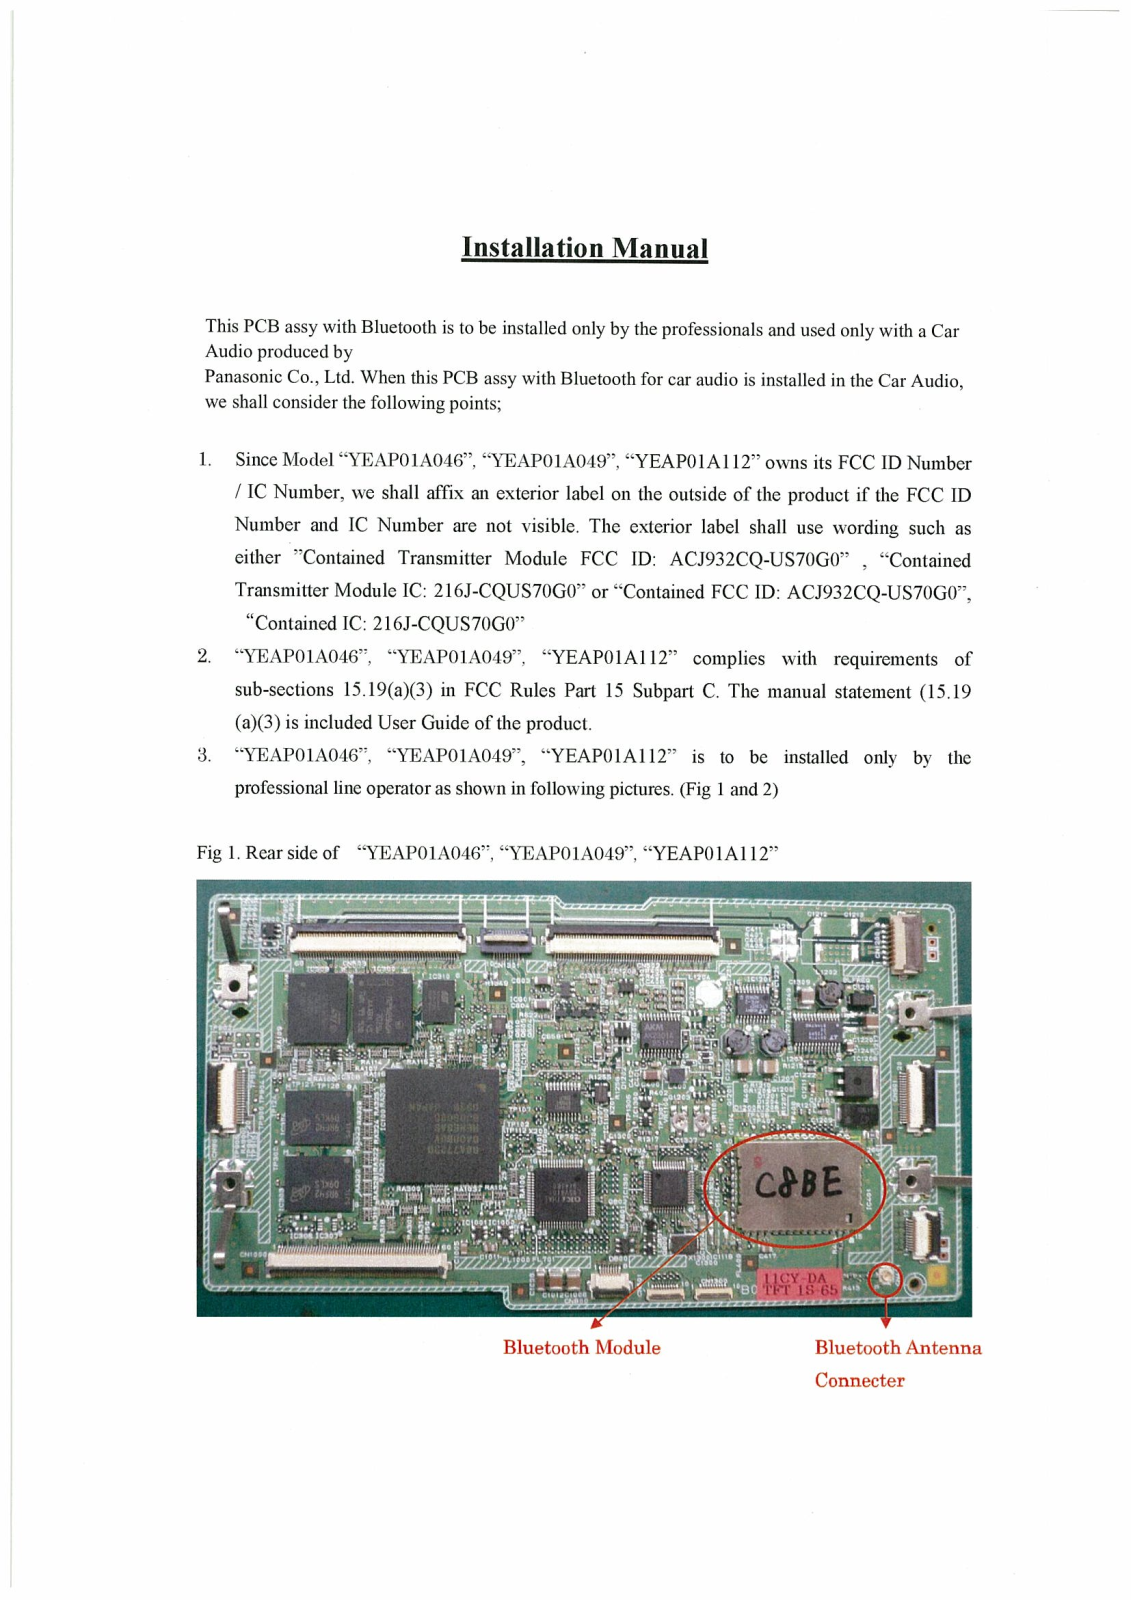 Panasonic 932CQ US70G0 Installation manual